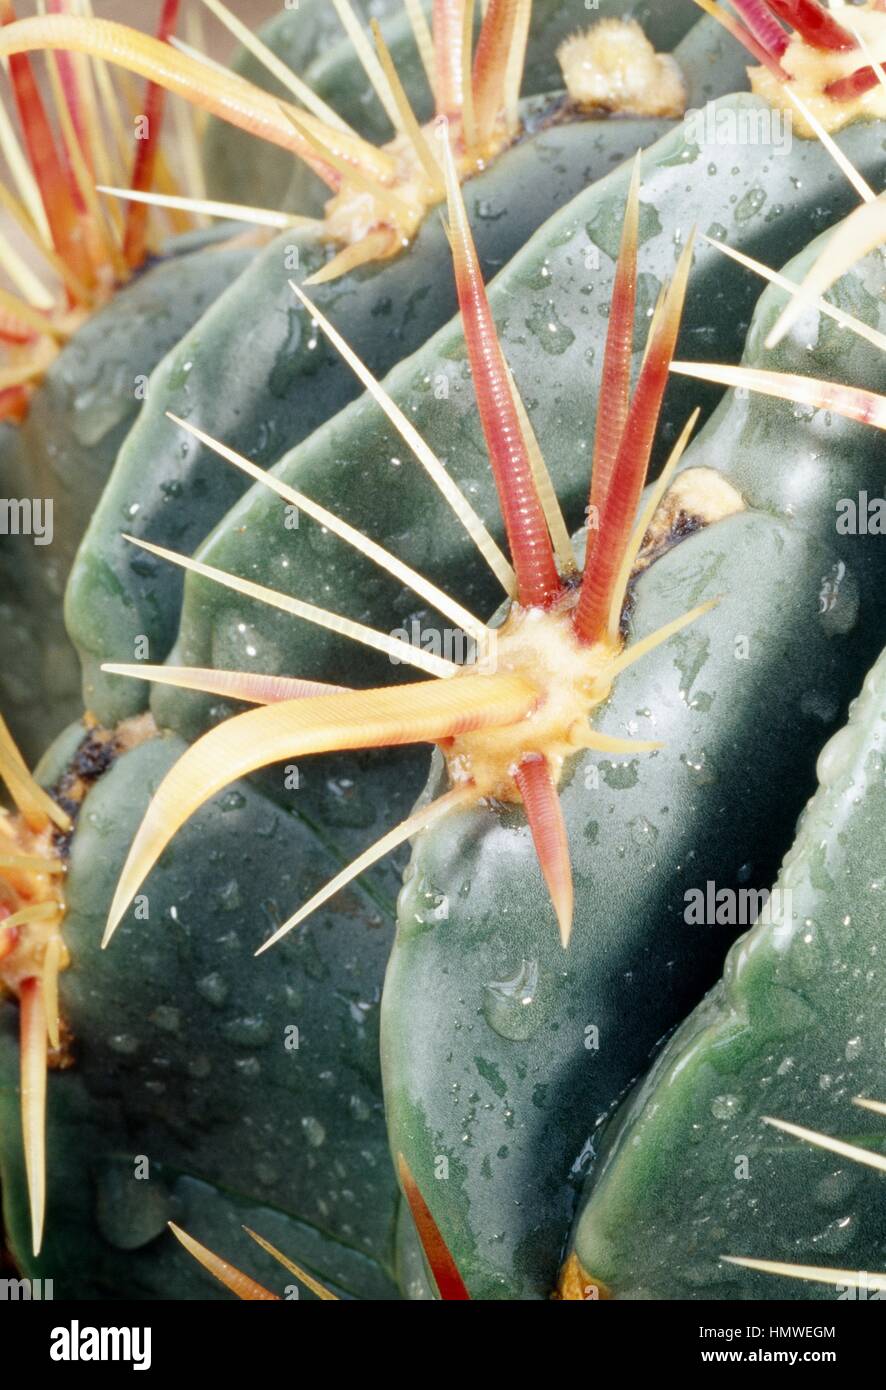 Devil's linguetta barrell o Crow's claw cactus (Ferocactus latispinus), Cactaceae. Dettaglio della sua peculiare spine rossastre. Foto Stock